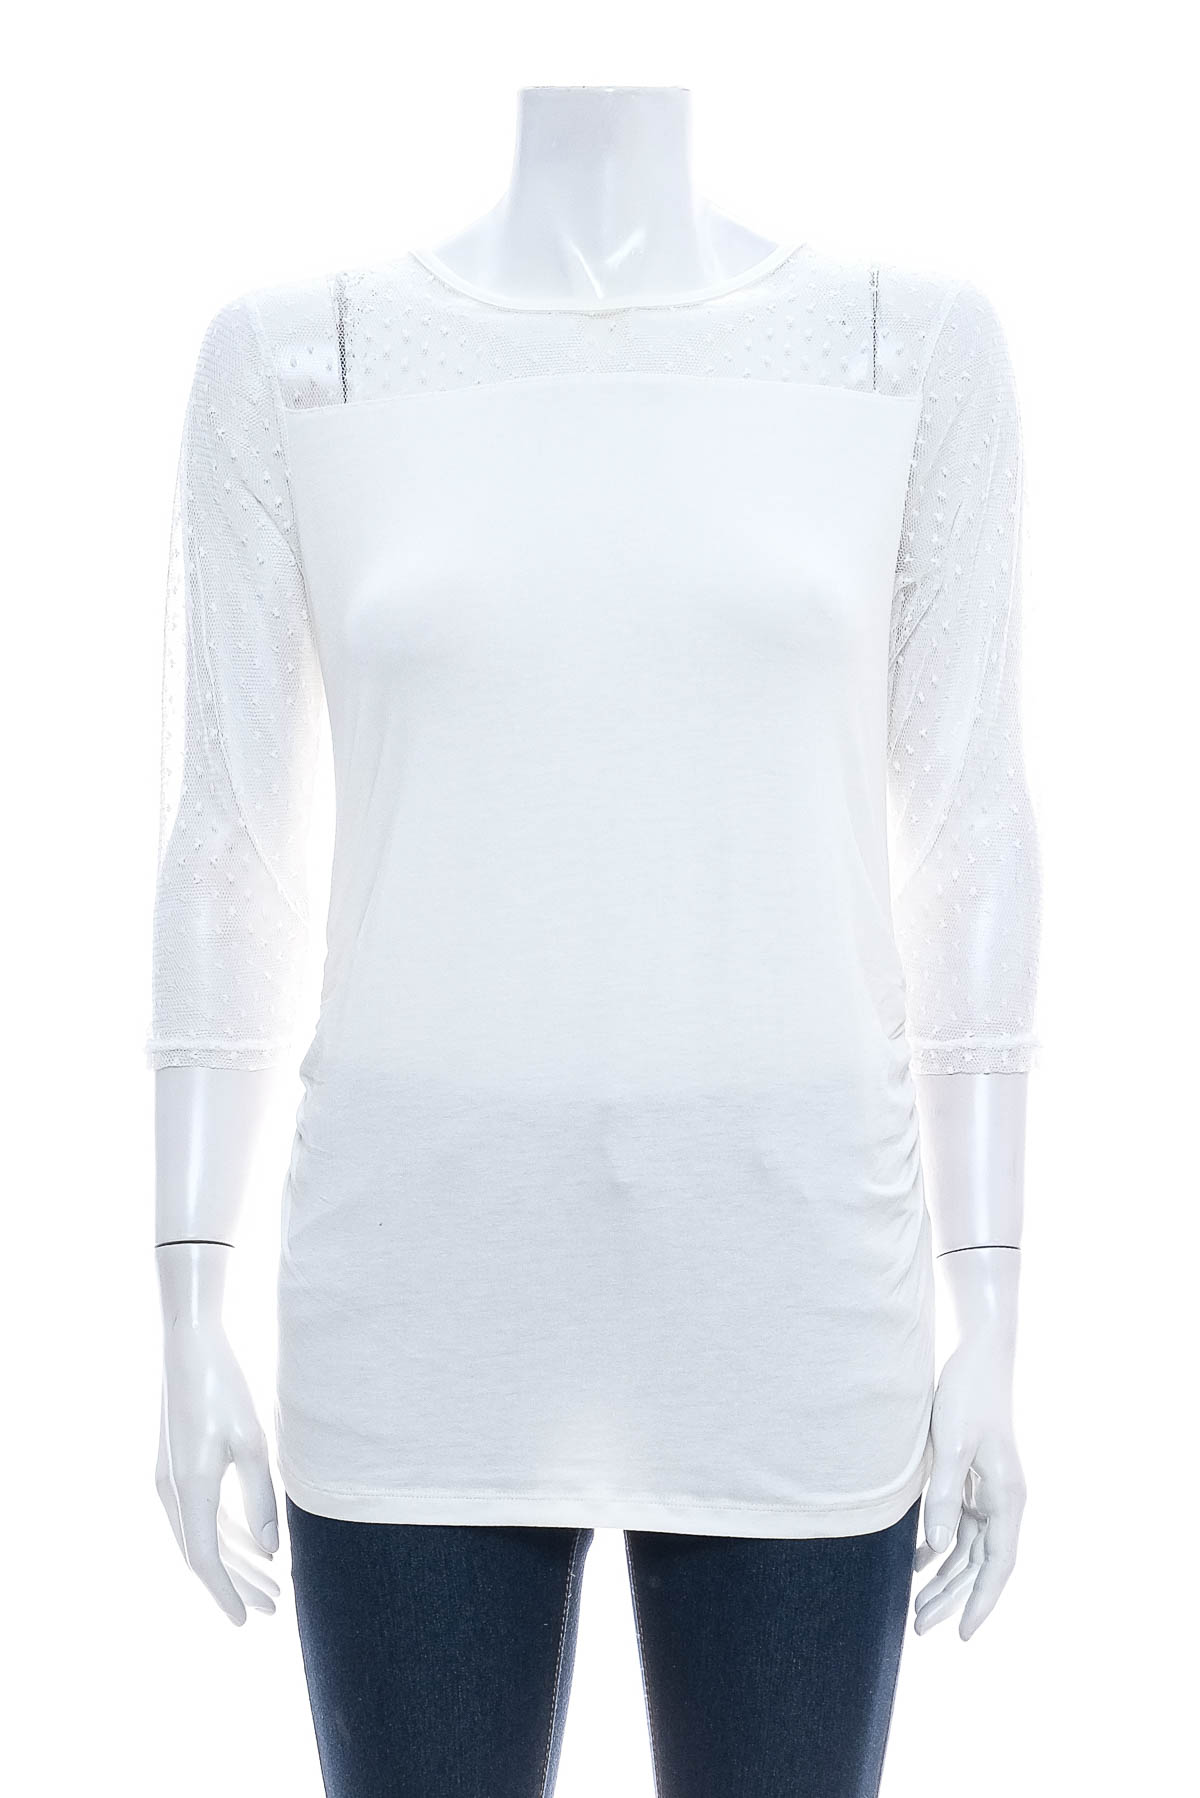 Women's blouse for pregnant women - Neun9monate - 0